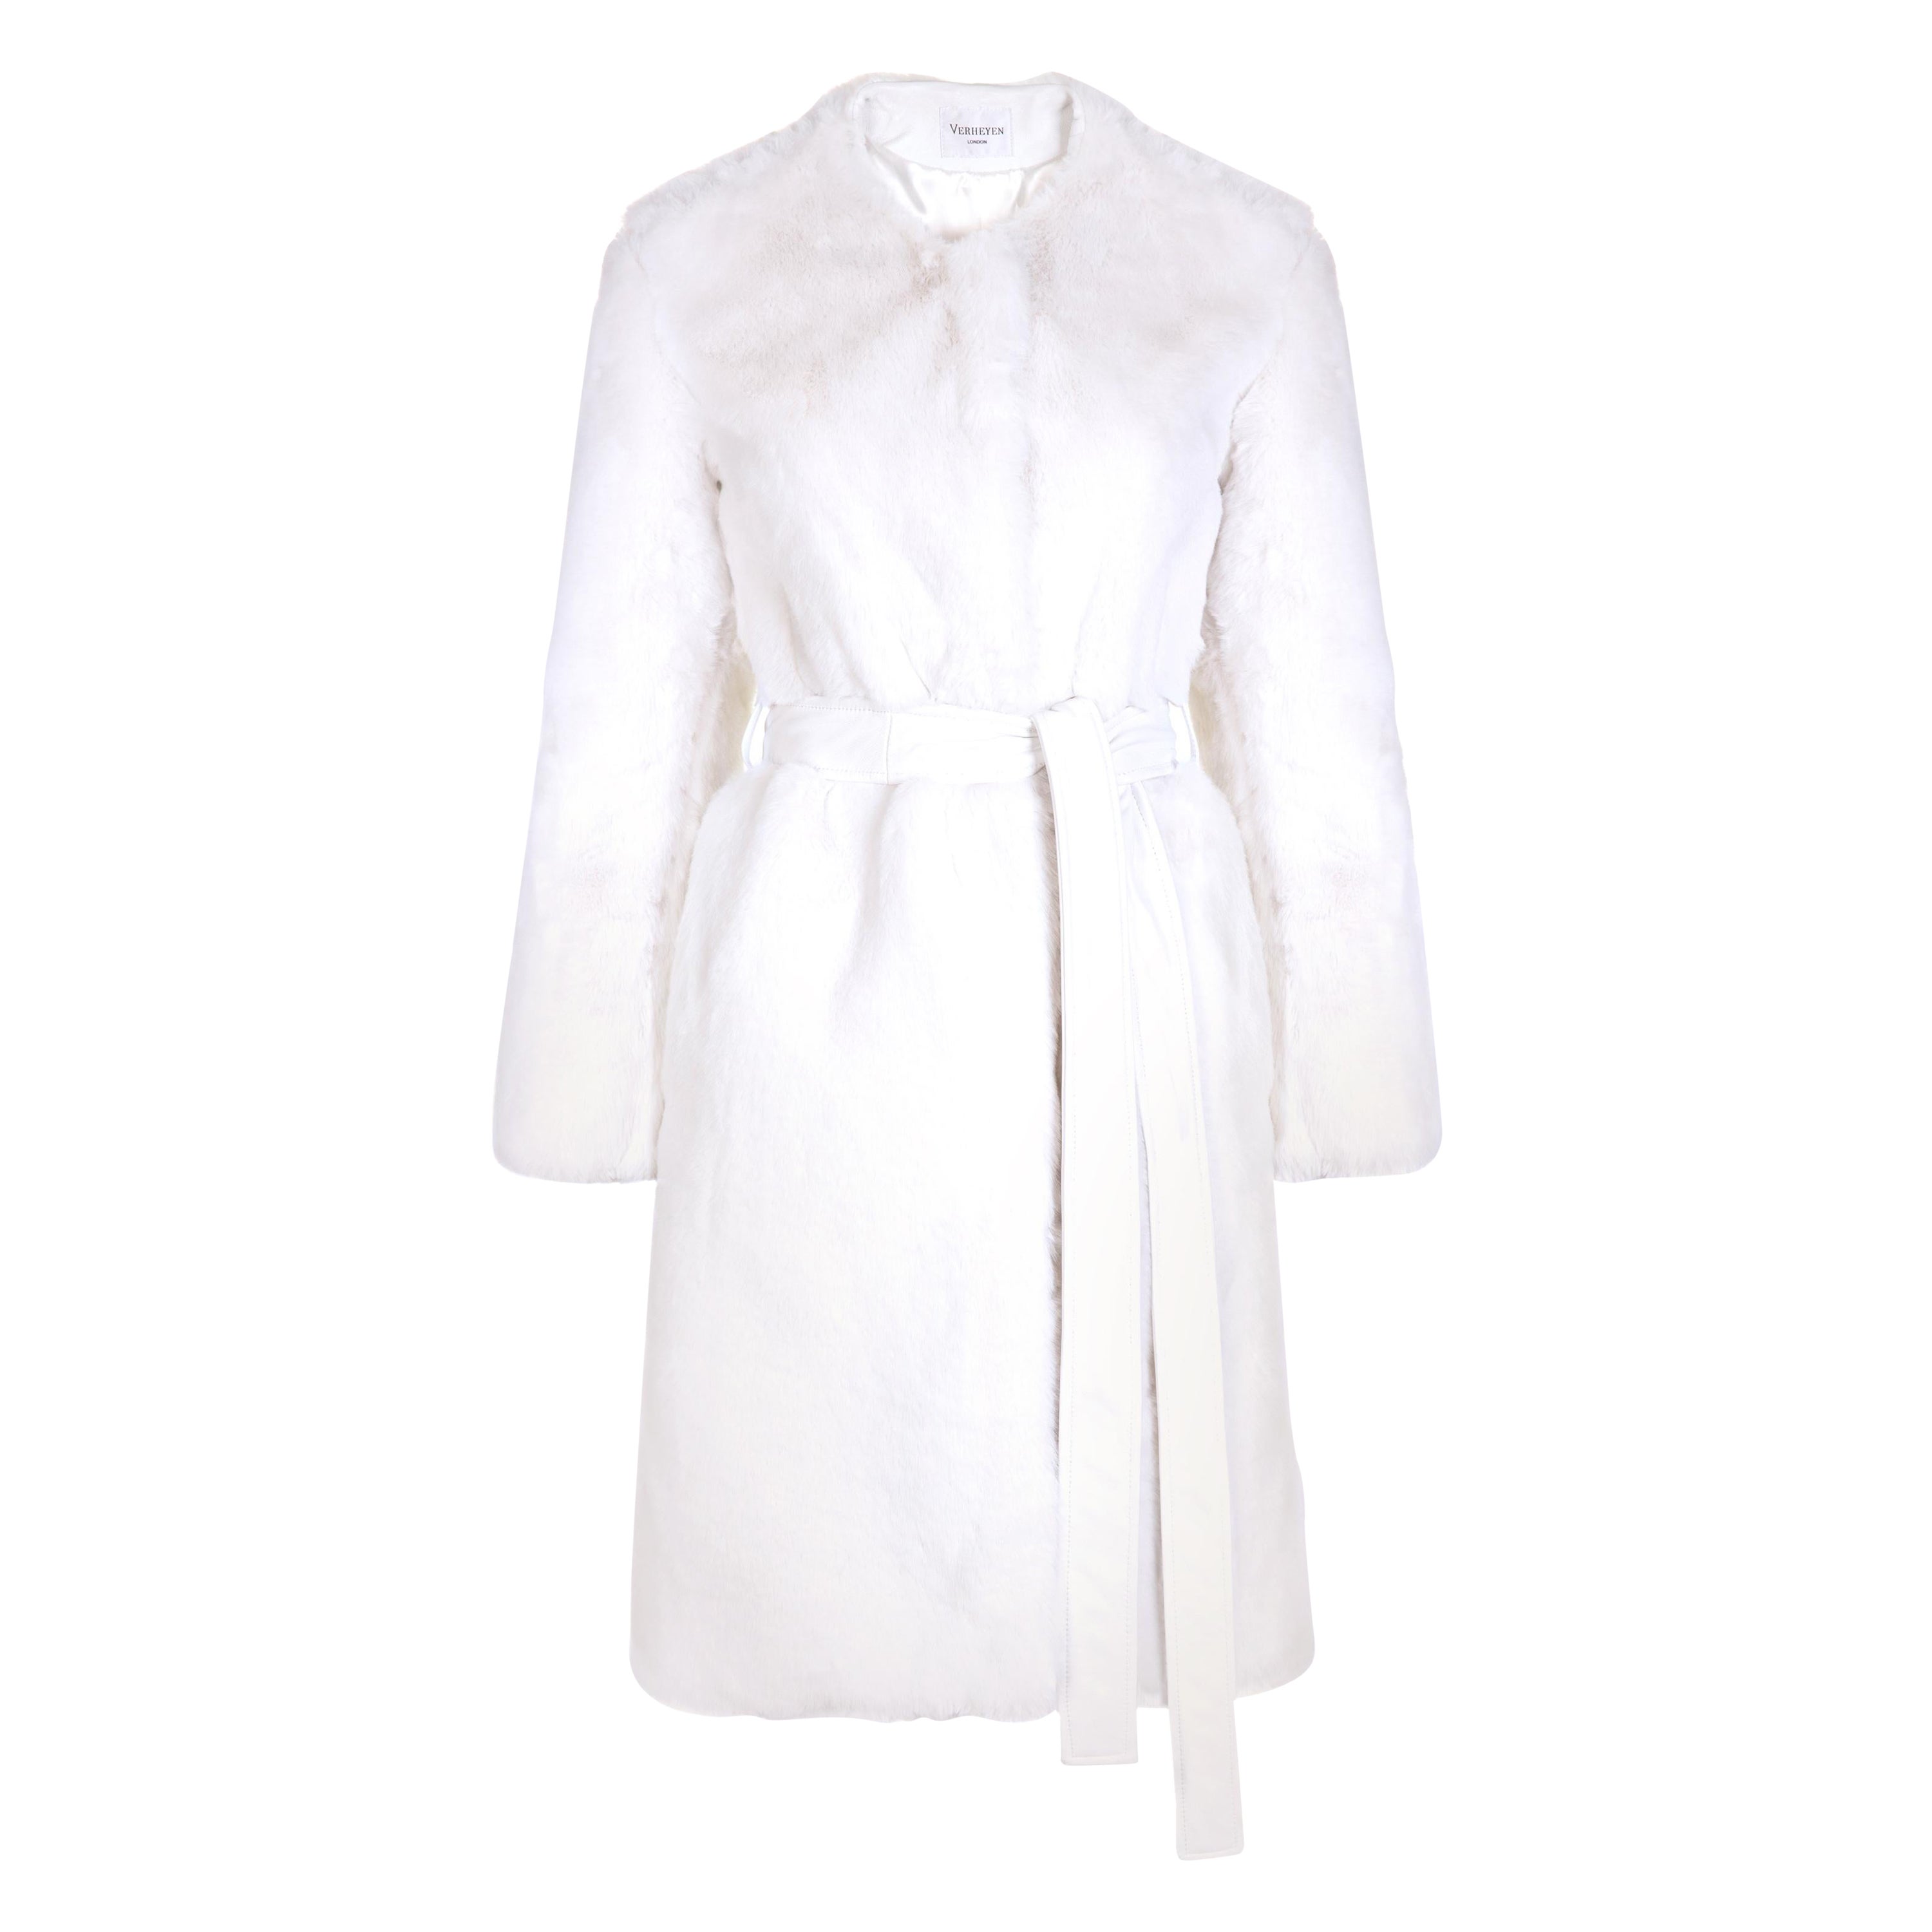 Verheyen London Serena  Collarless Faux Fur Coat in White - Size uk 10  For Sale